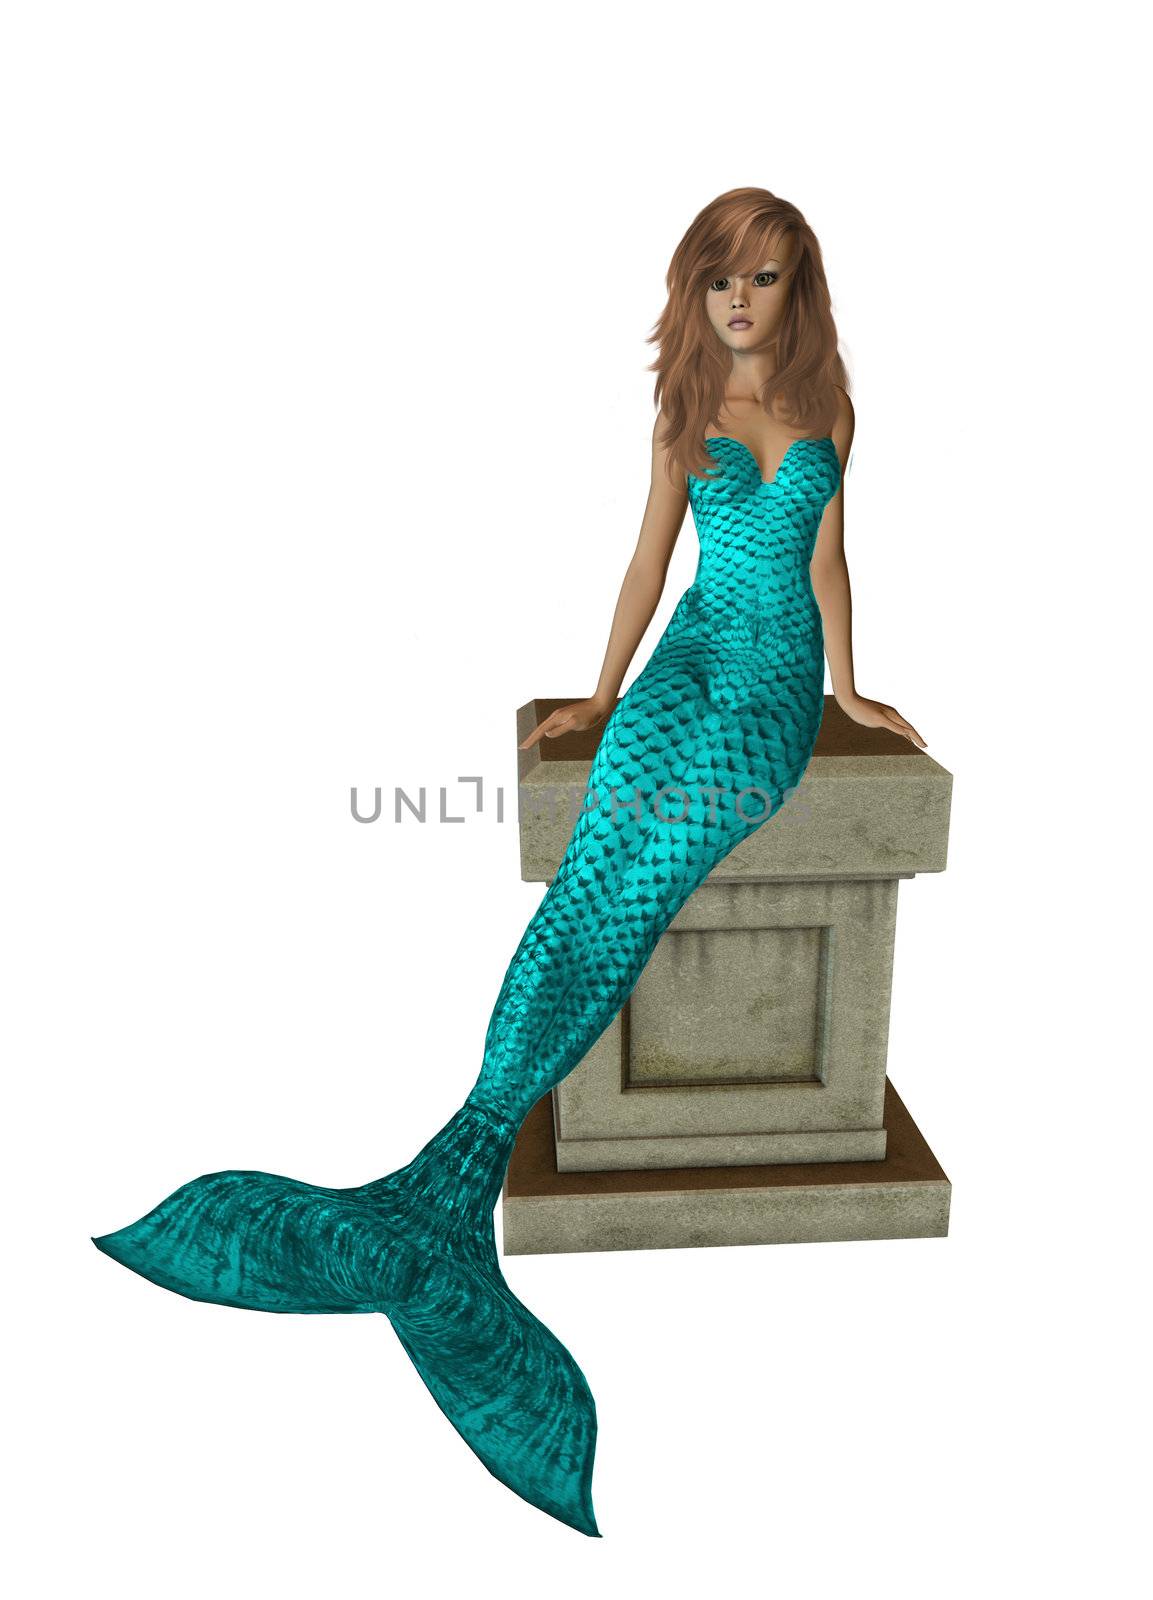 Aqua mermaid sitting on a pedestal 300 dpi